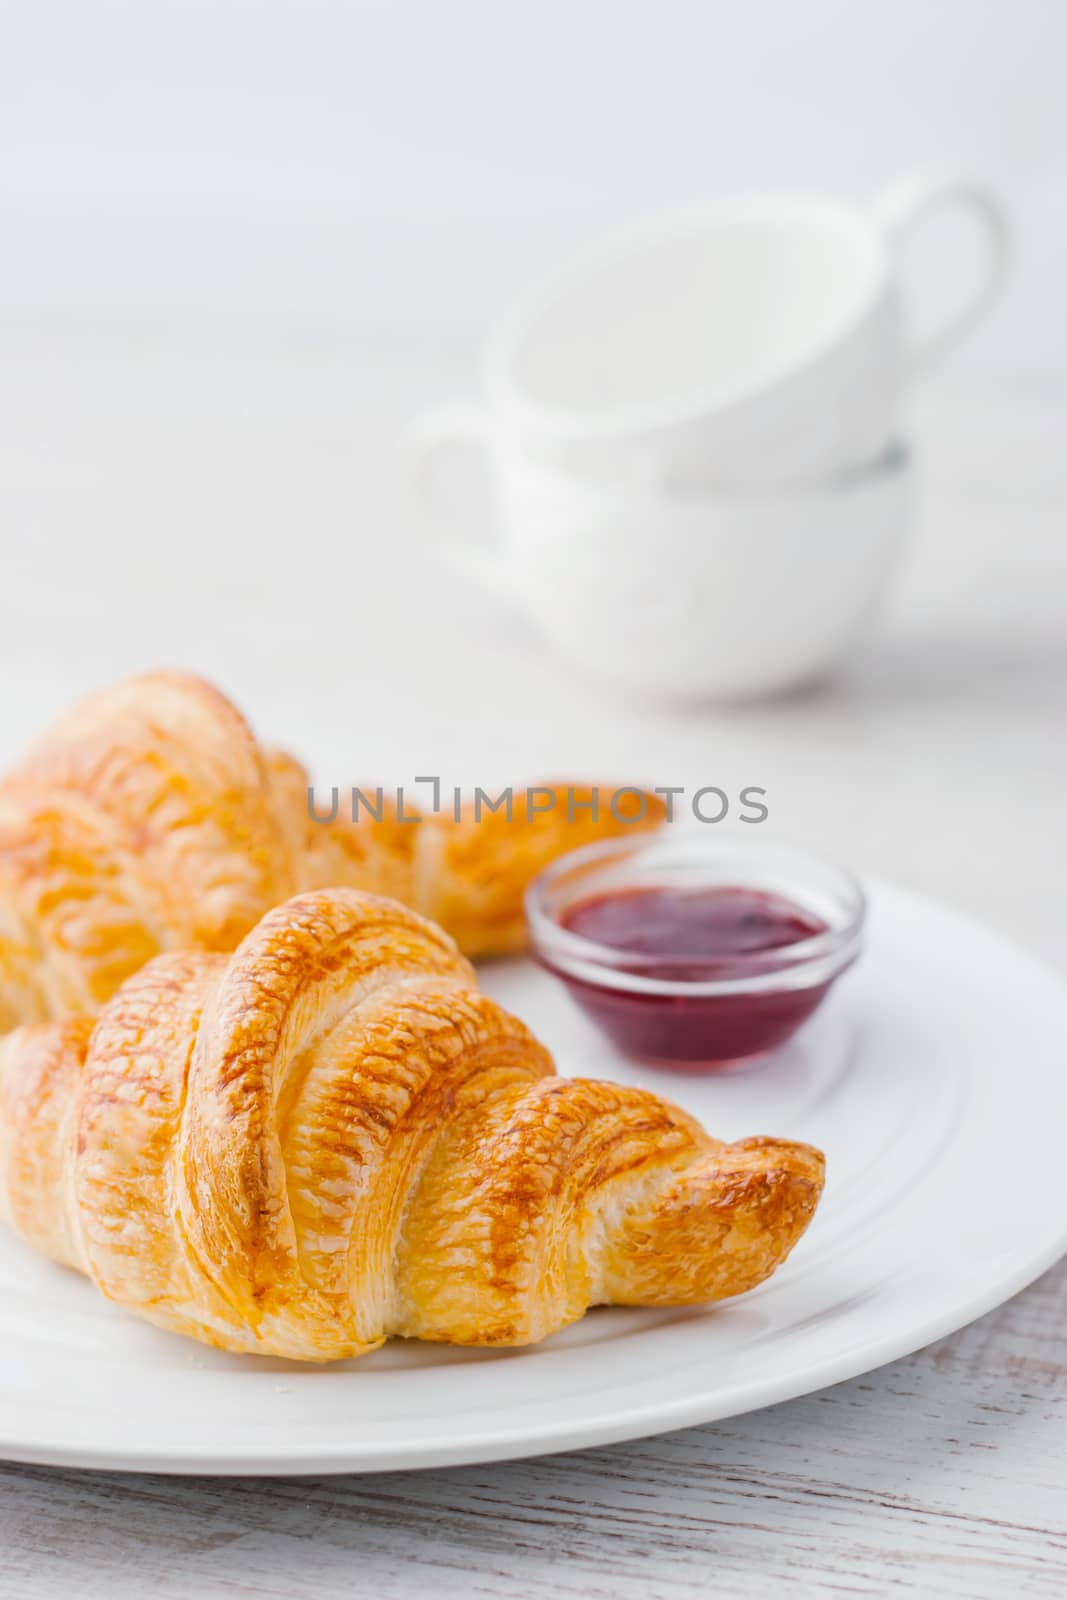 Croissants with jam by Deniskarpenkov